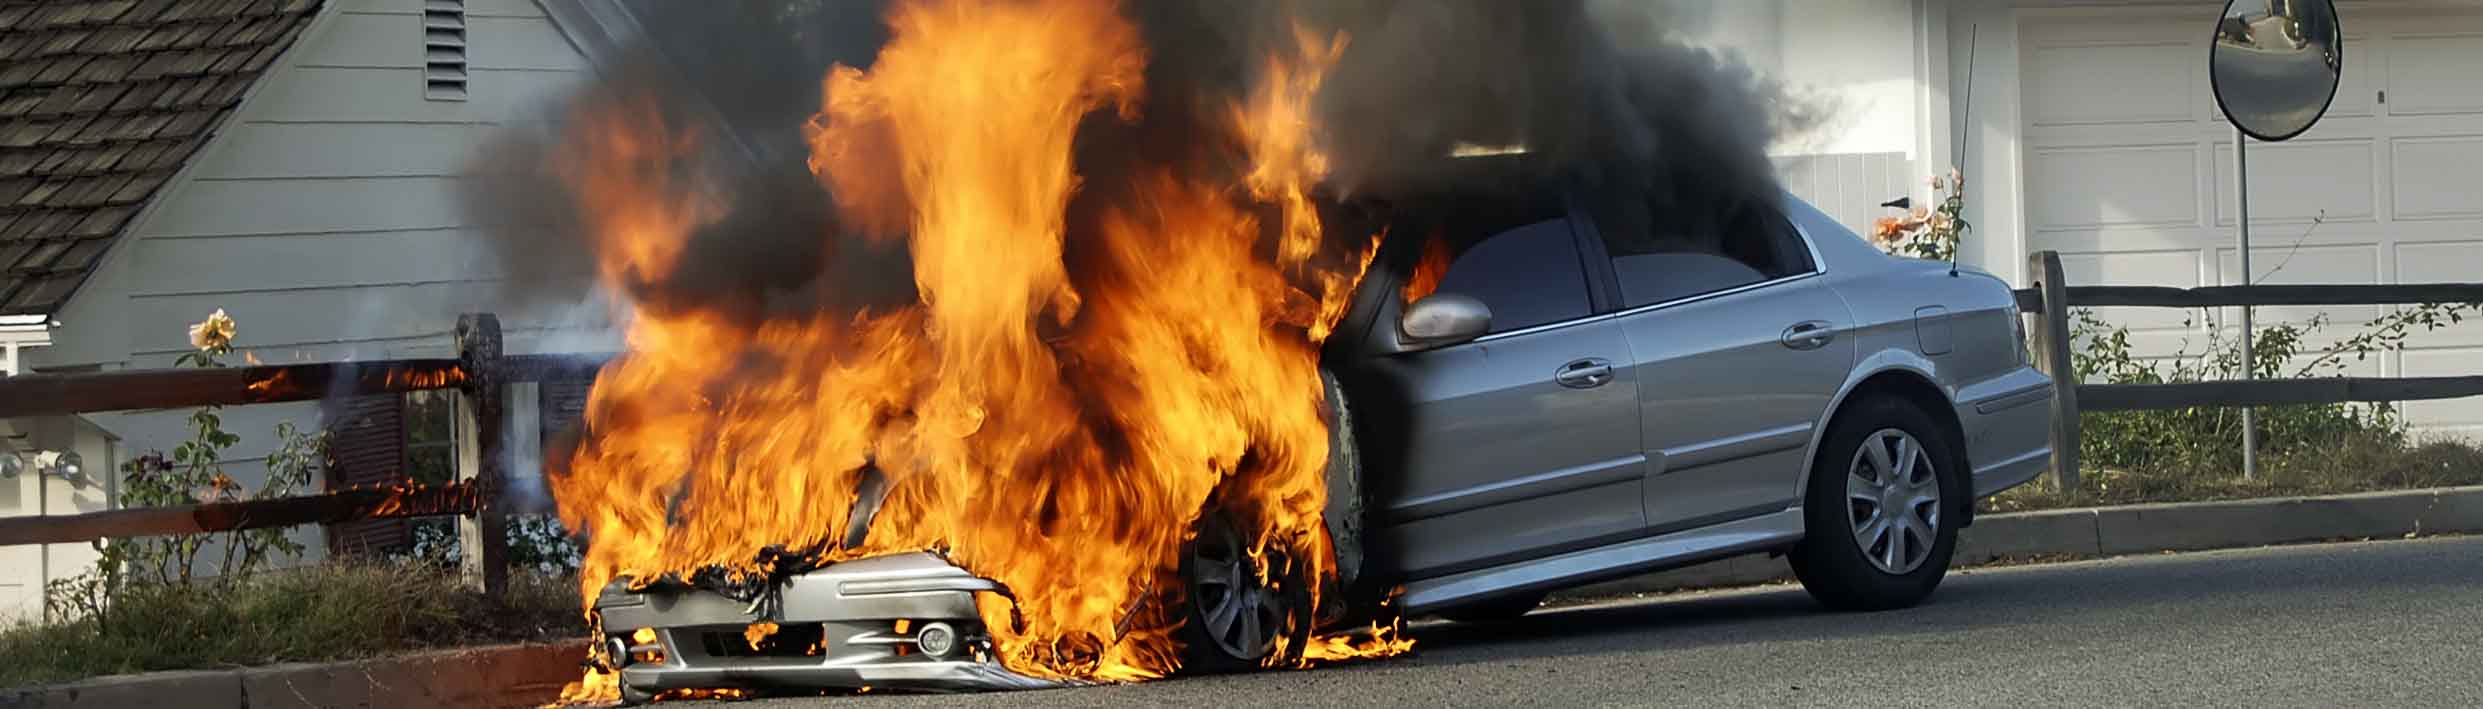 Determining Origin and Cause of Car Fires